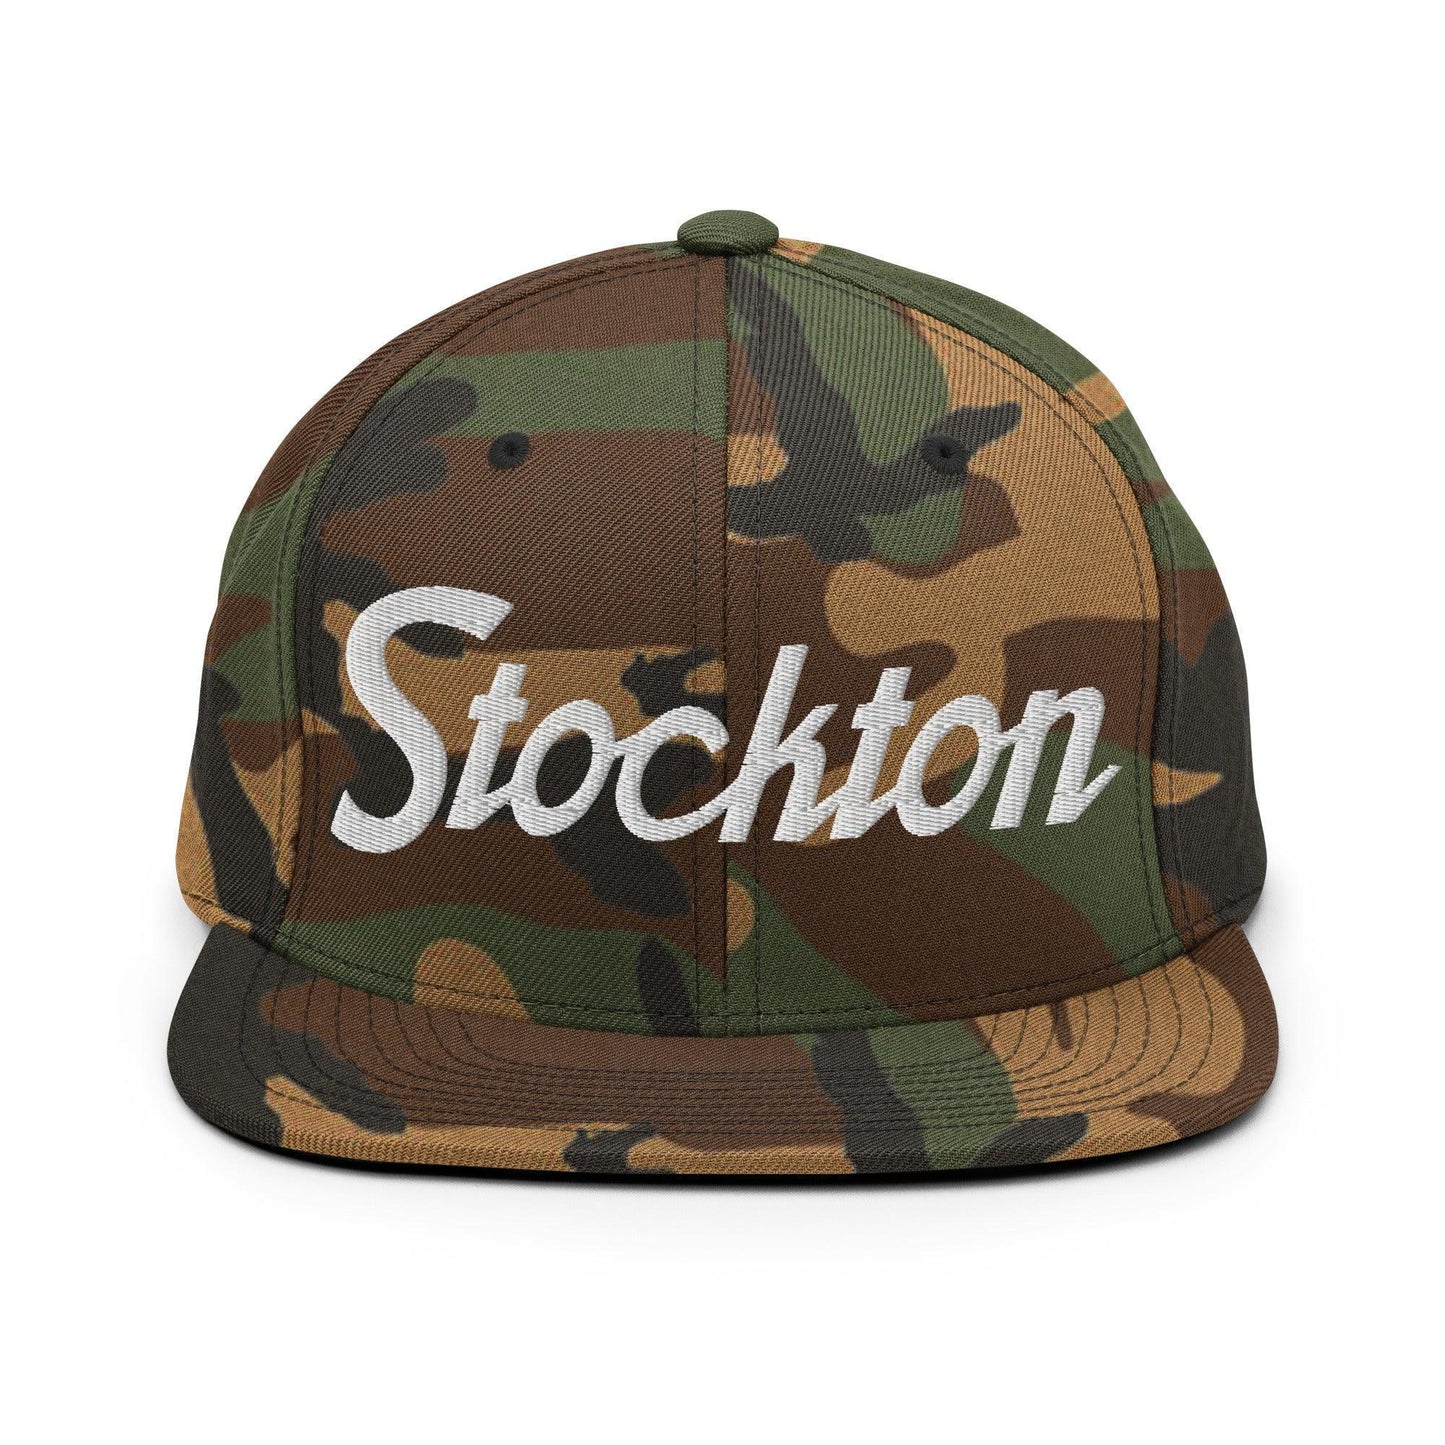 Stockton Script Snapback Hat Green Camo